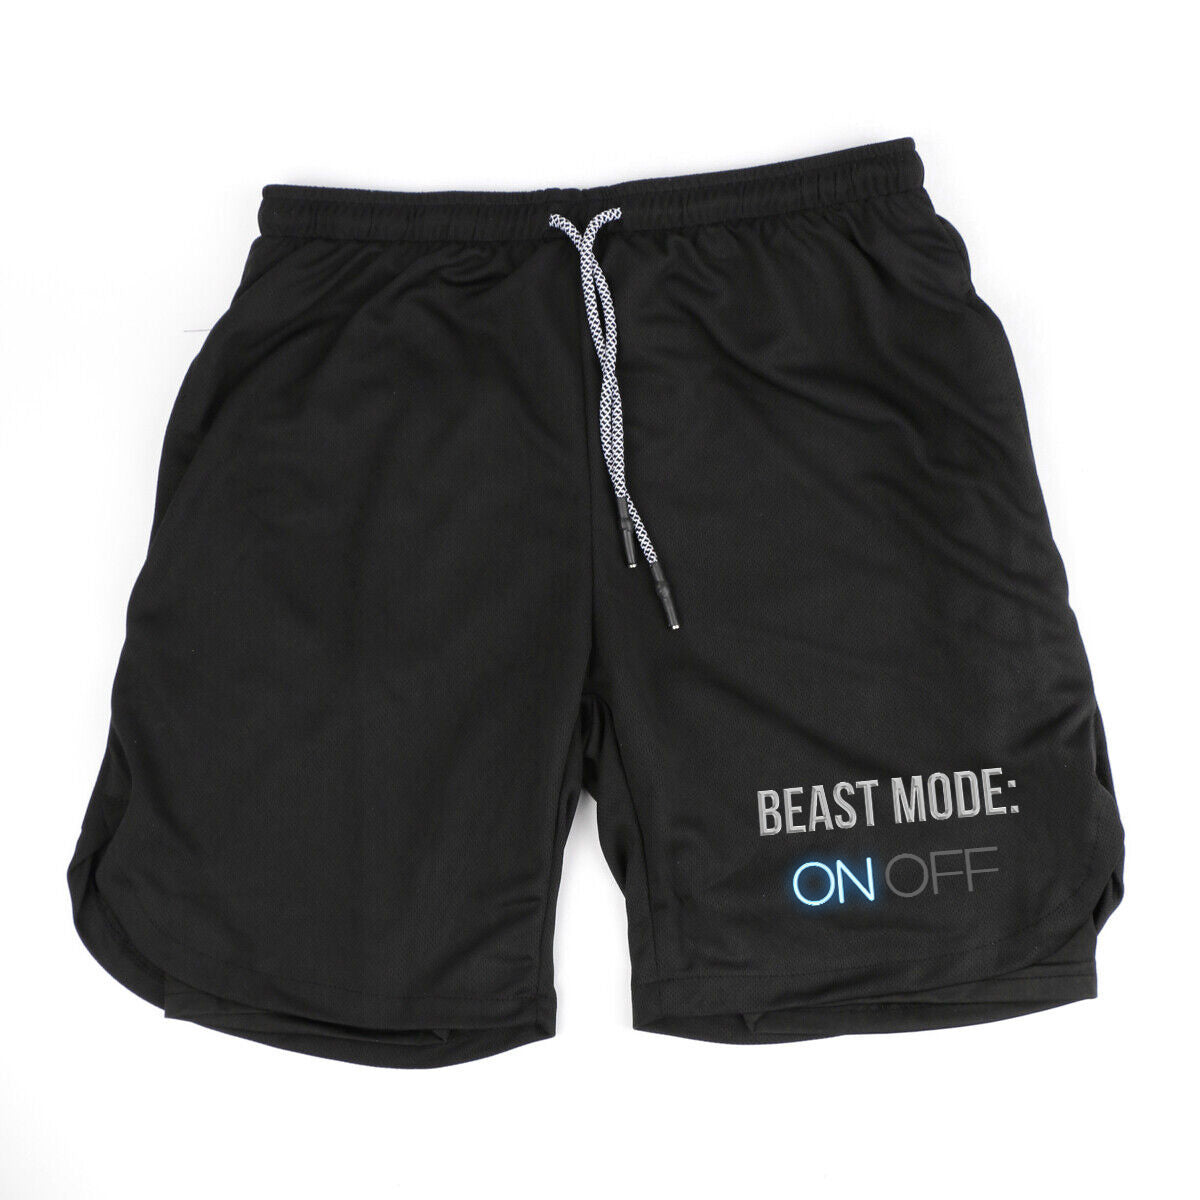 Beast Mode: On Off Print Men's Shorts